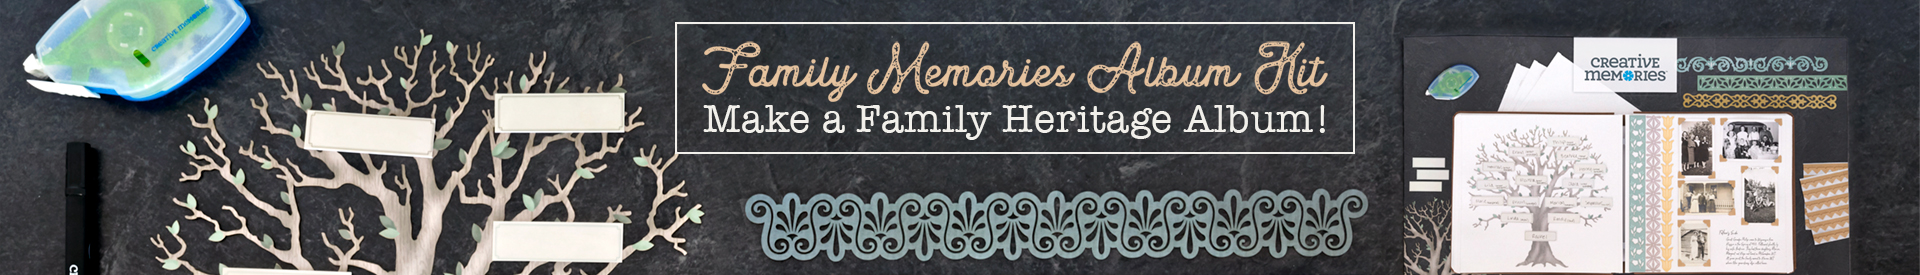 Heritage Albums: Family Memories